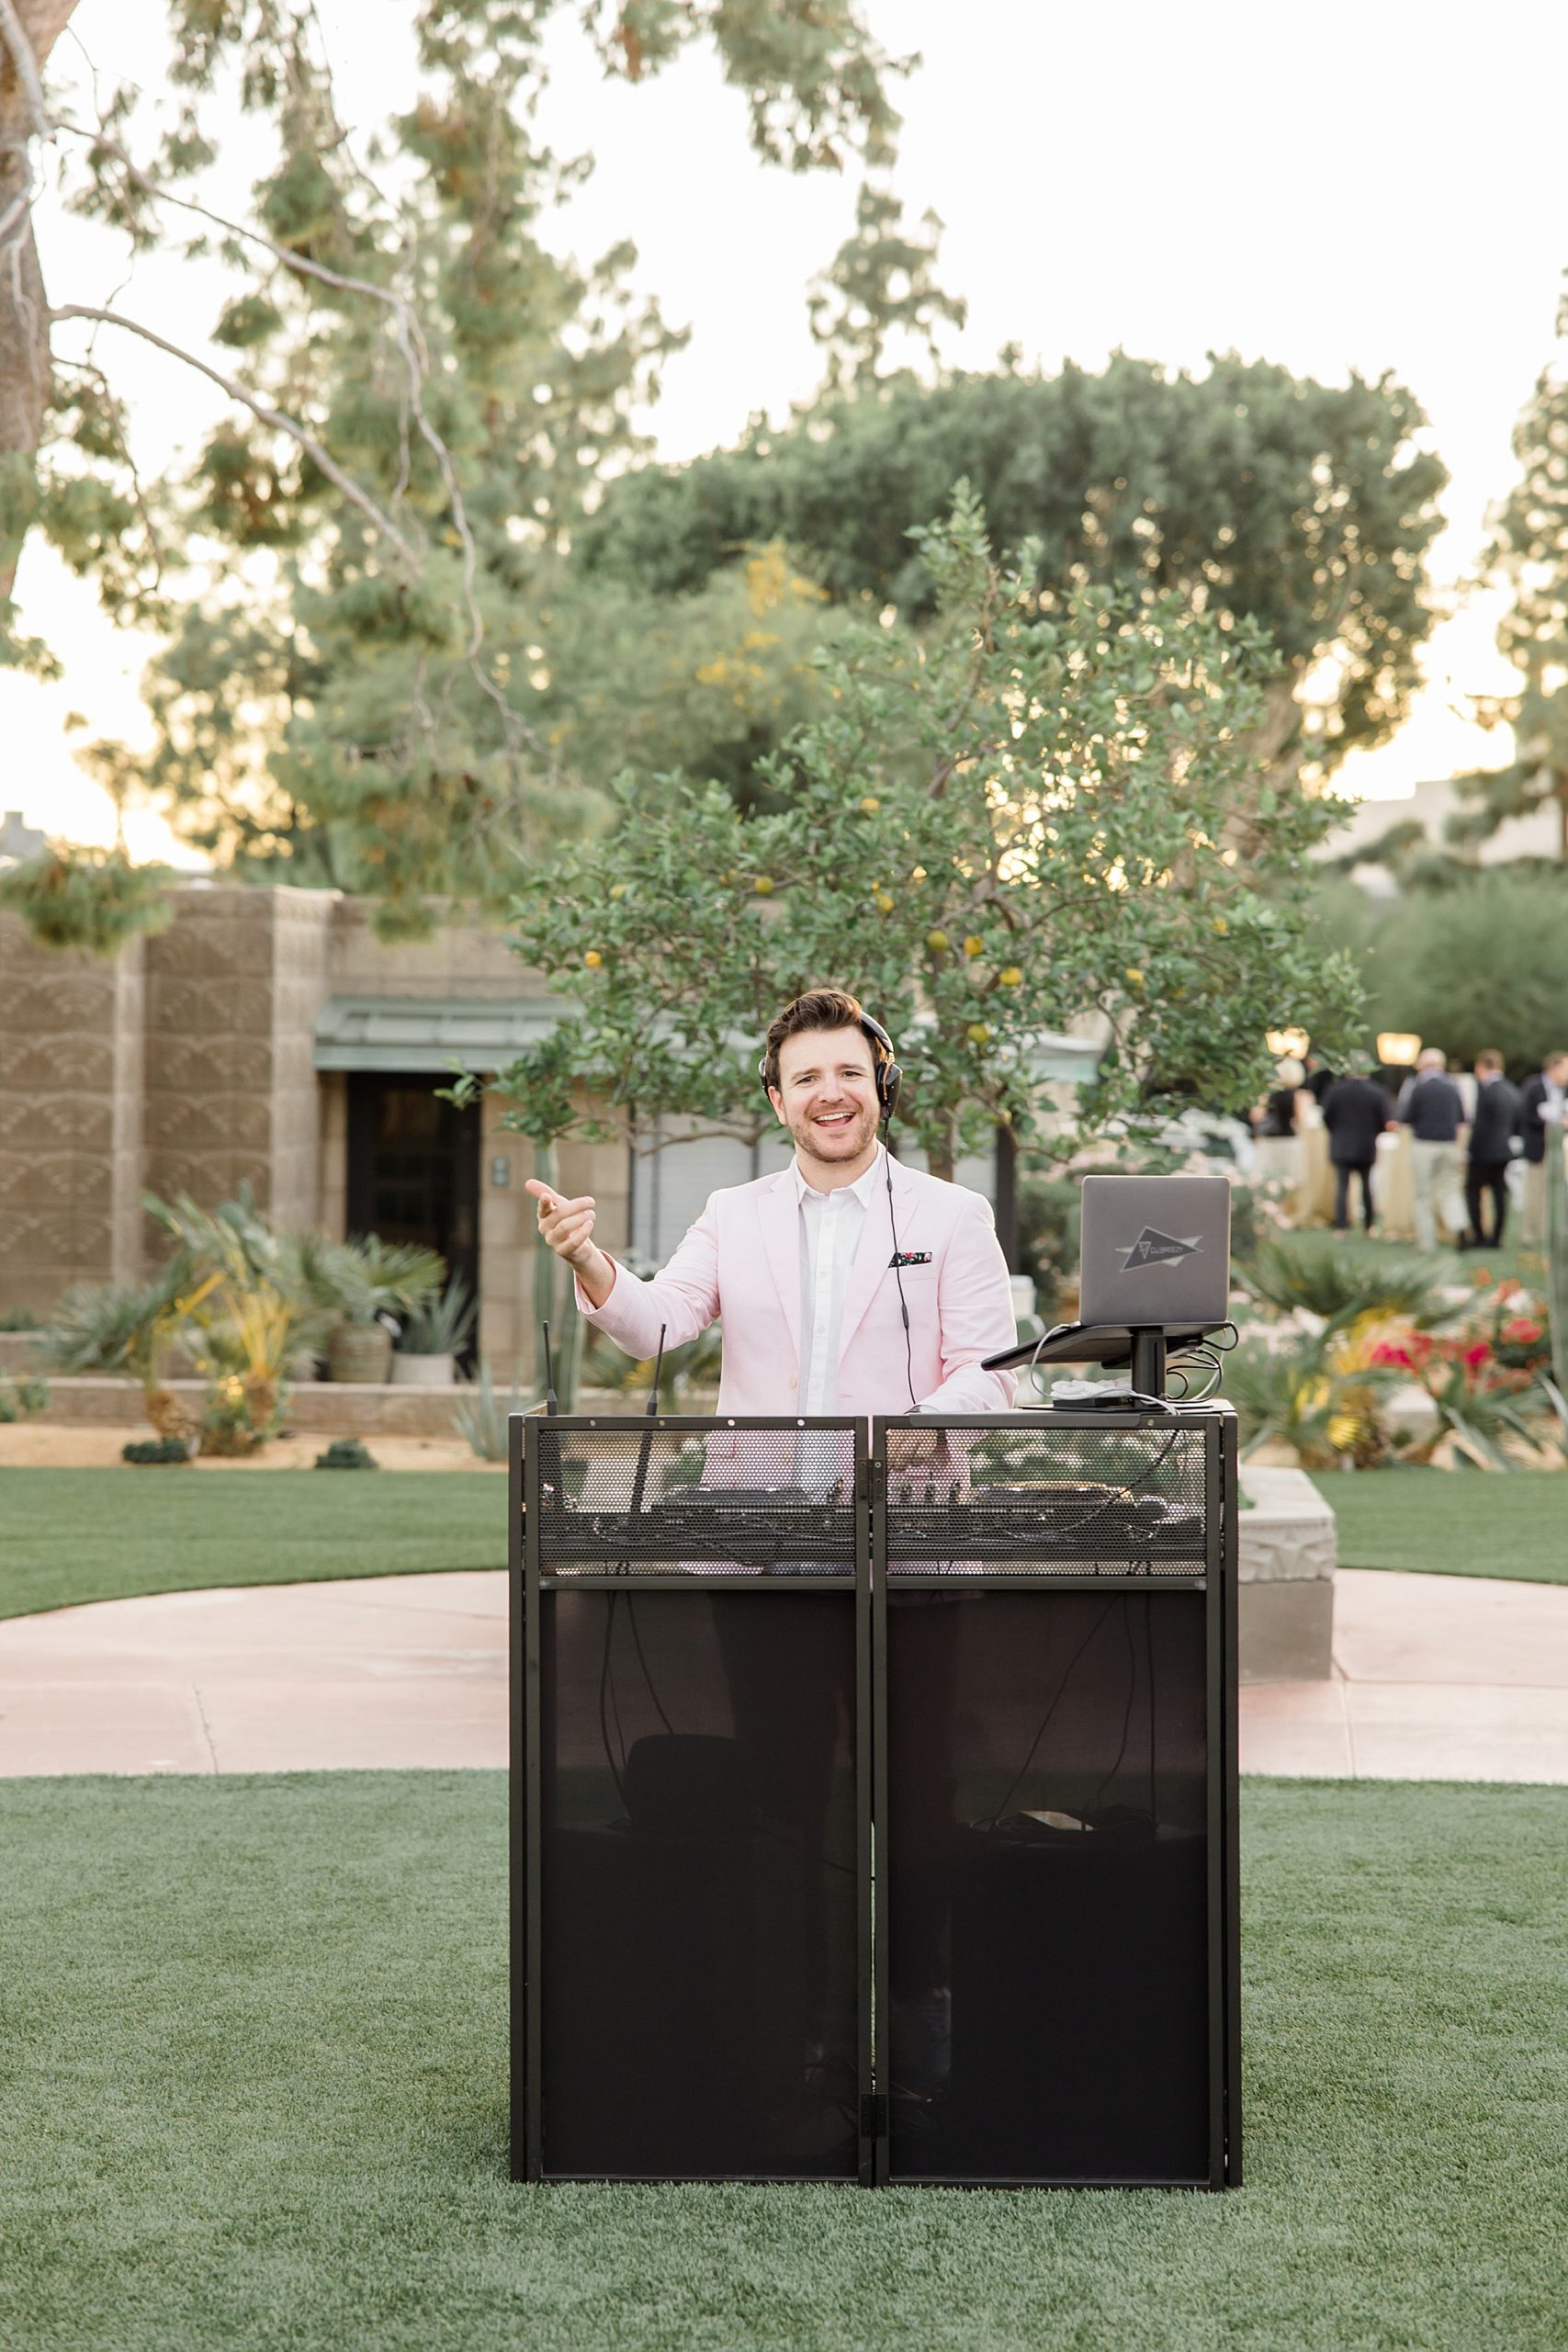 DJ plays music during wedding reception in Phoenix 